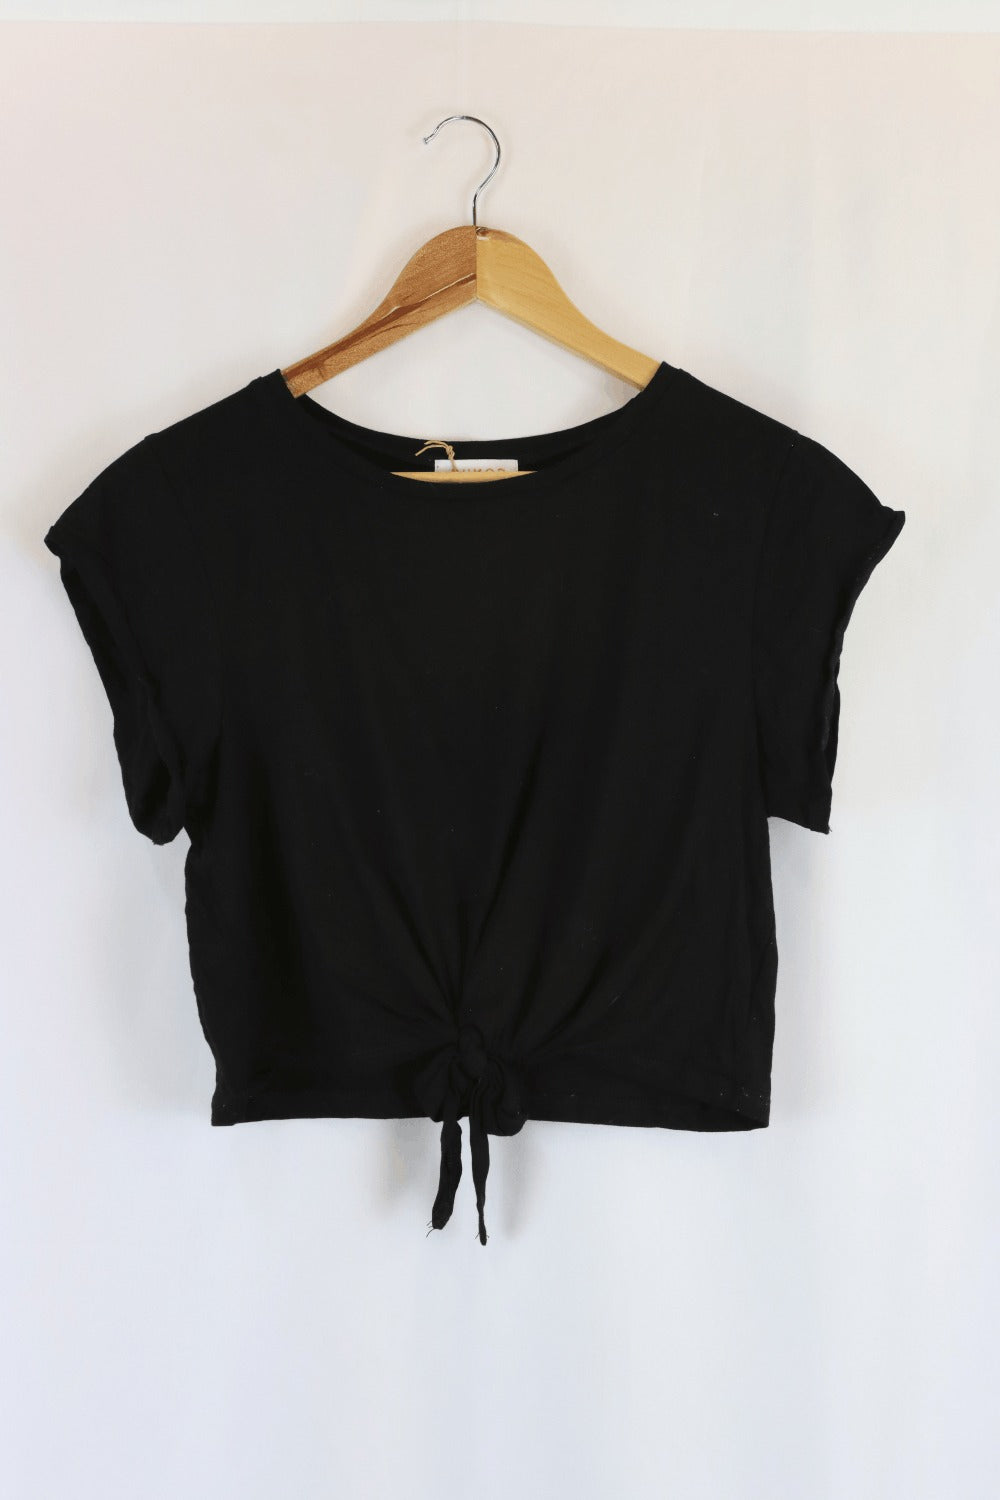 Rockwear Black Long Sleeve Top 14 - Reluv Clothing Australia